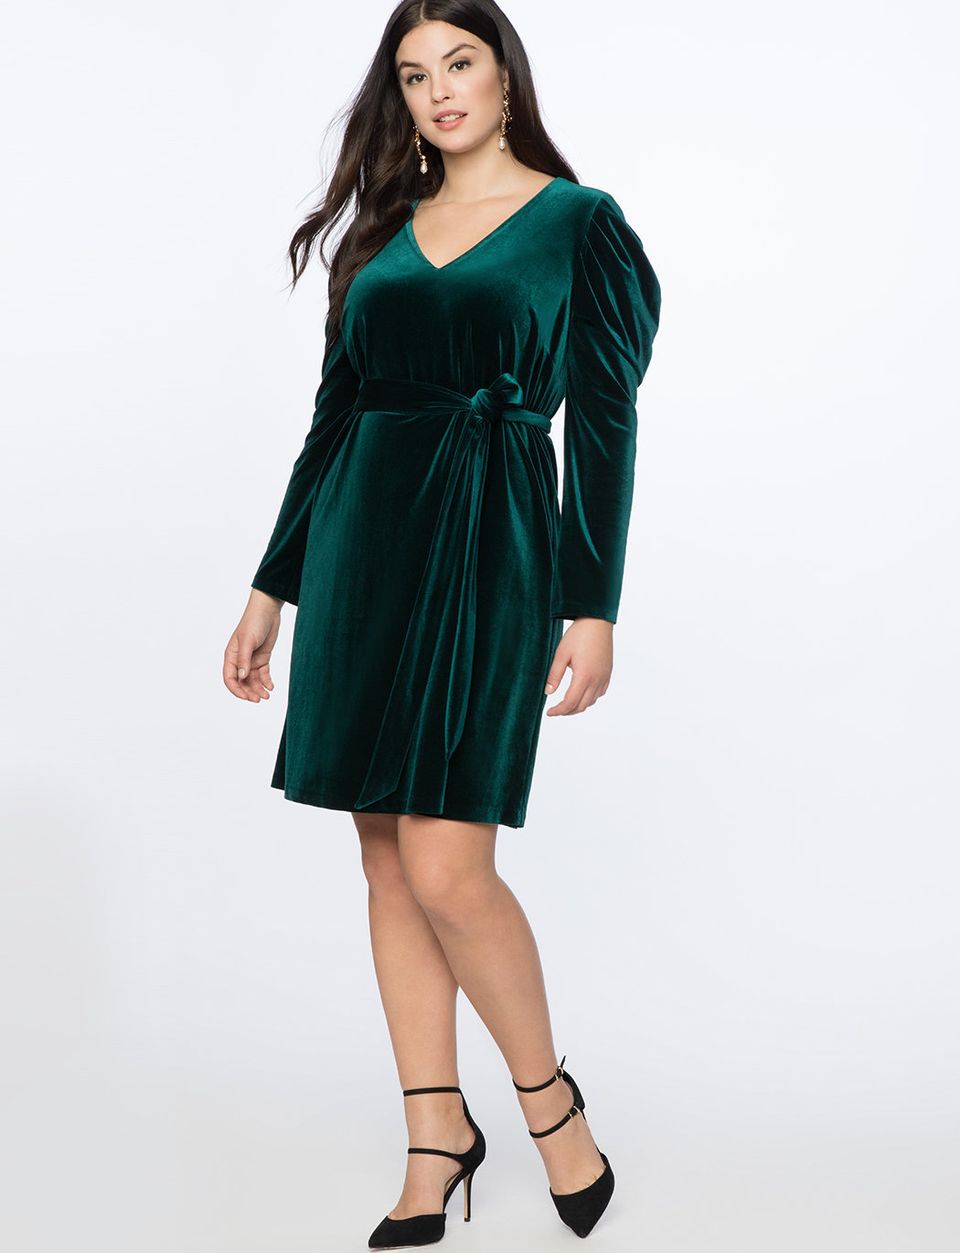 25 Plus-Size Holiday Dresses That'll Sleigh This Season | HuffPost Life